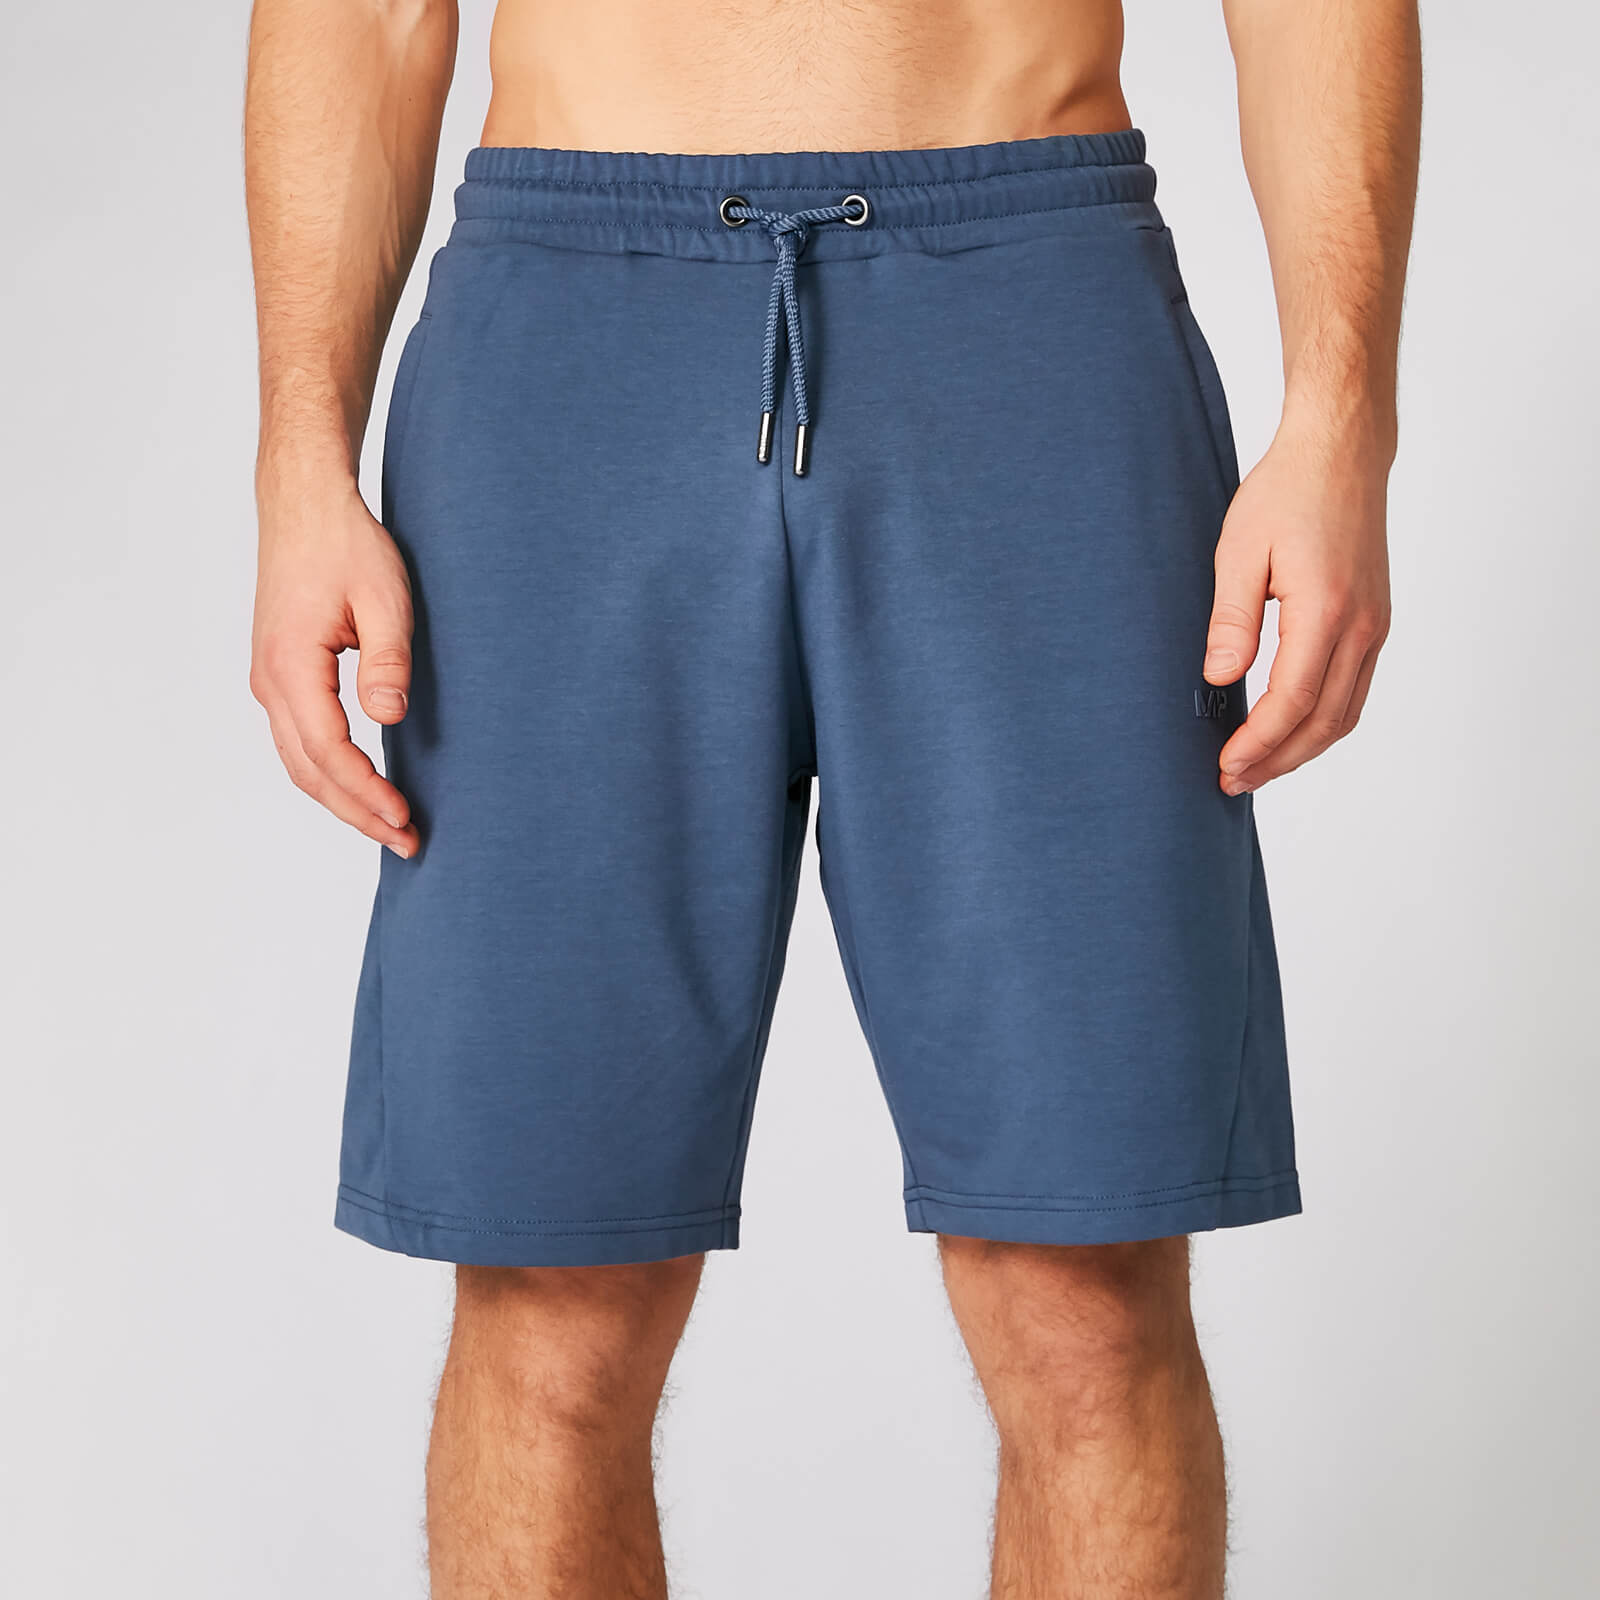 Form 挺拔系列 男士修身運動短褲 - 深藍色 - XS